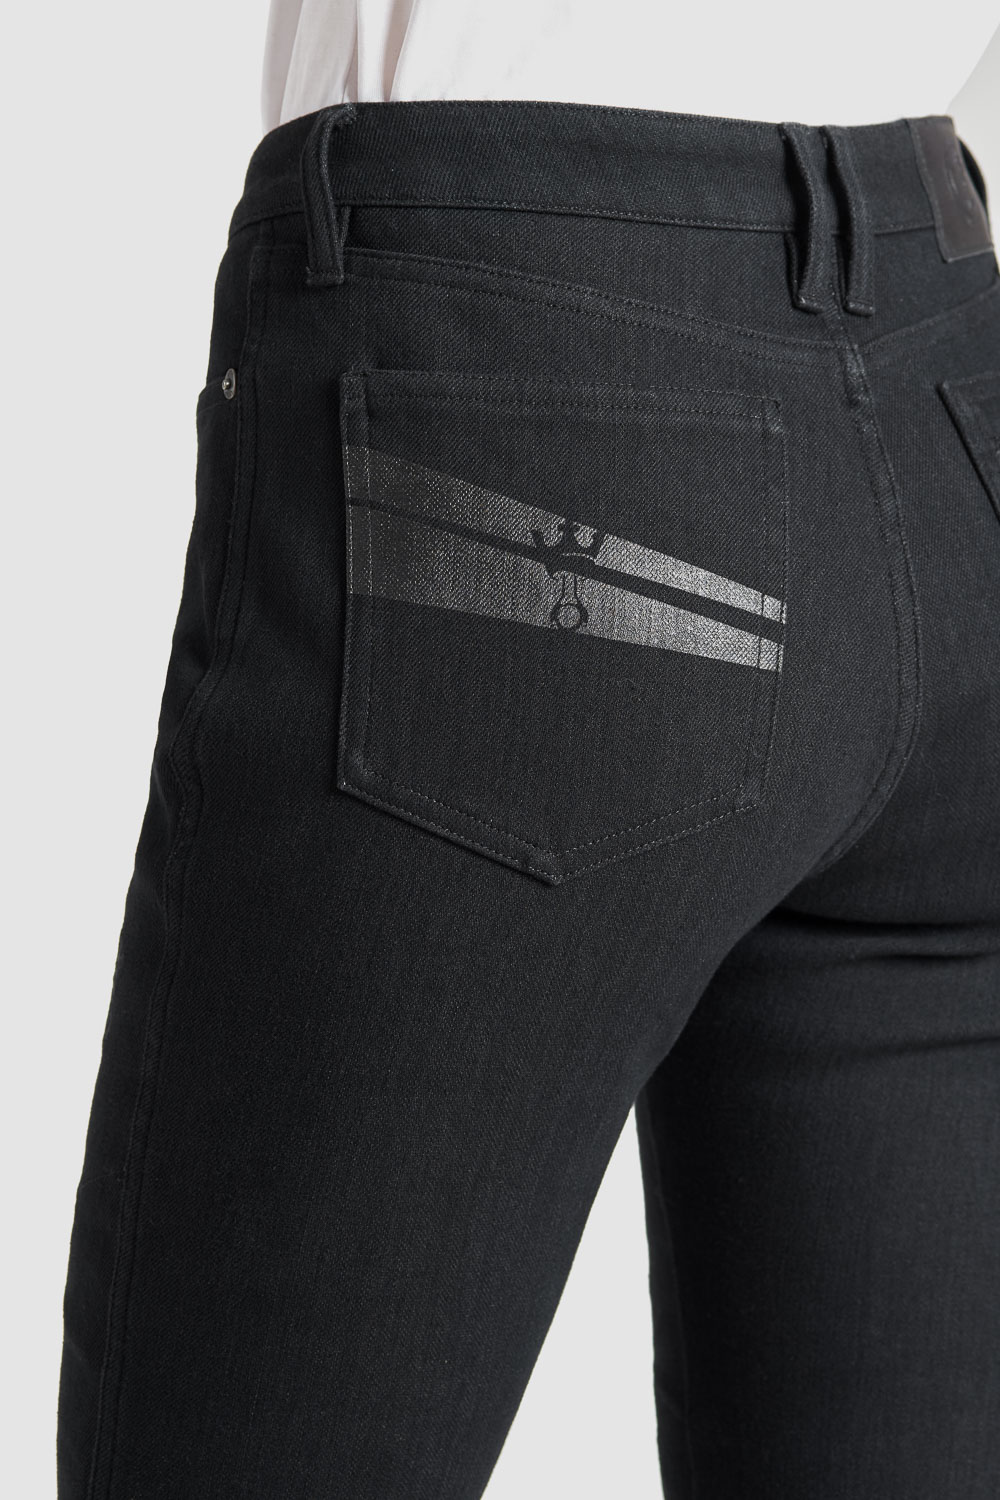 Kissaki Dyn 01 Motorcycle Jeans for Women rear pocket close up